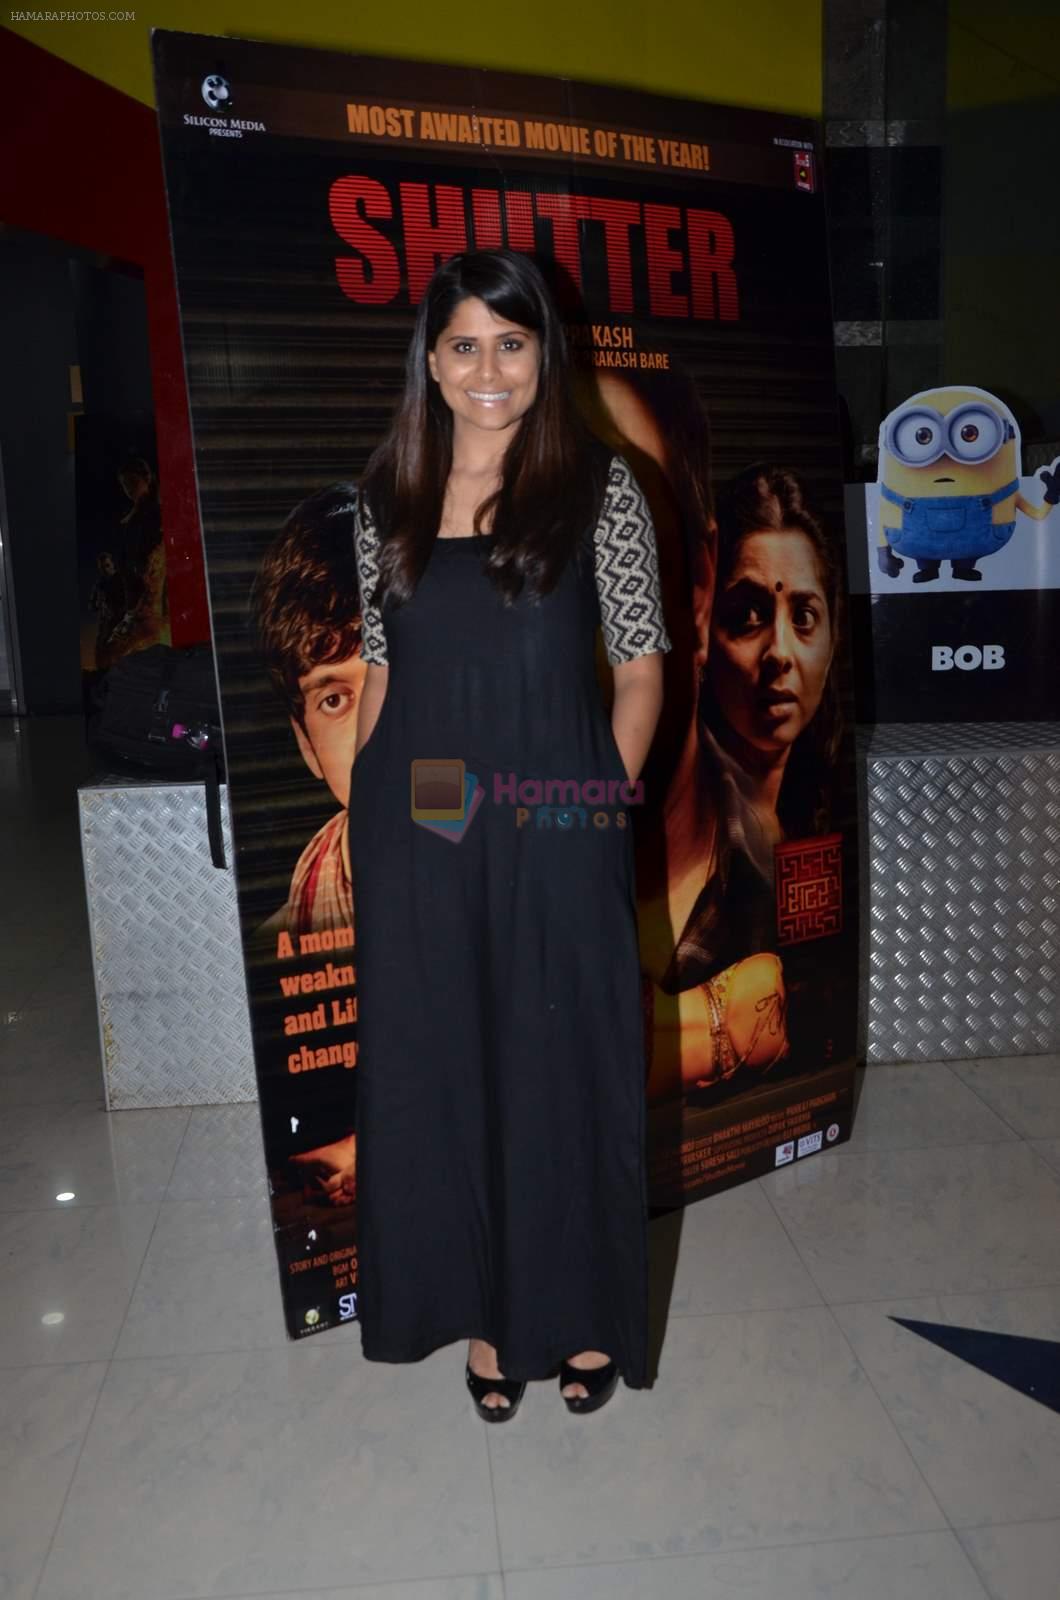 Sai Tamhankar at Shutter film premiere on 3rd July 215